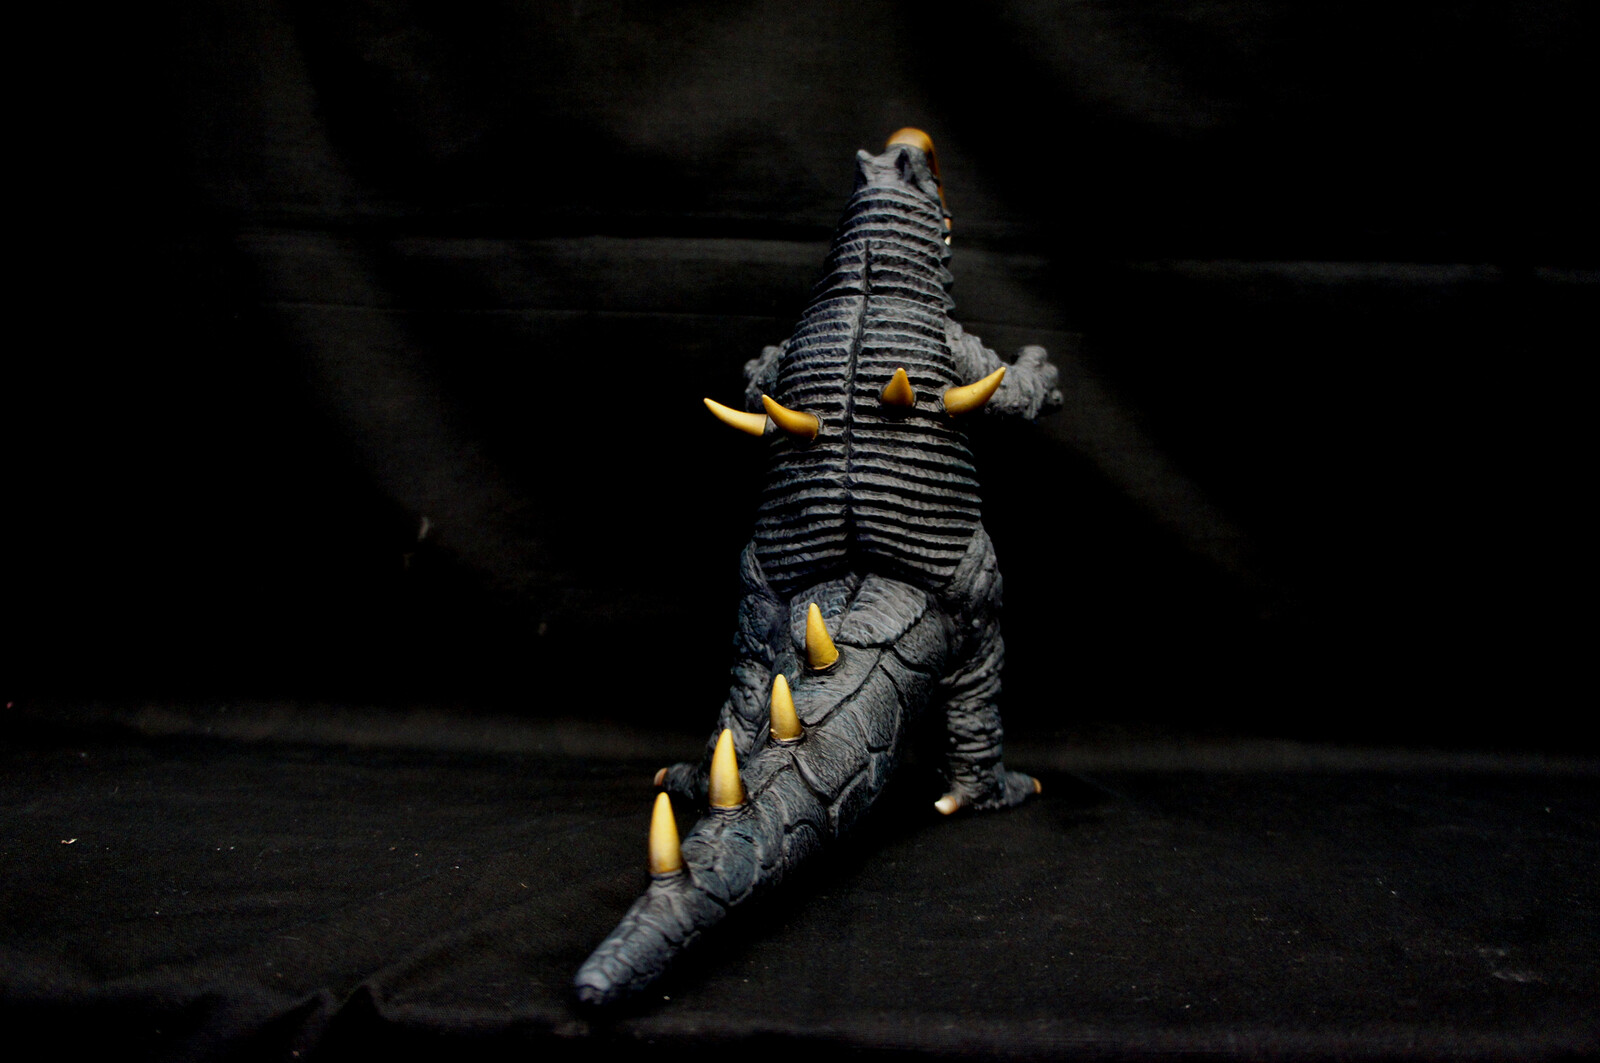 Ultra Kaiju Black King Art Statue 
用心棒怪獣 ブラックキング 完成品
https://www.solidart.club/